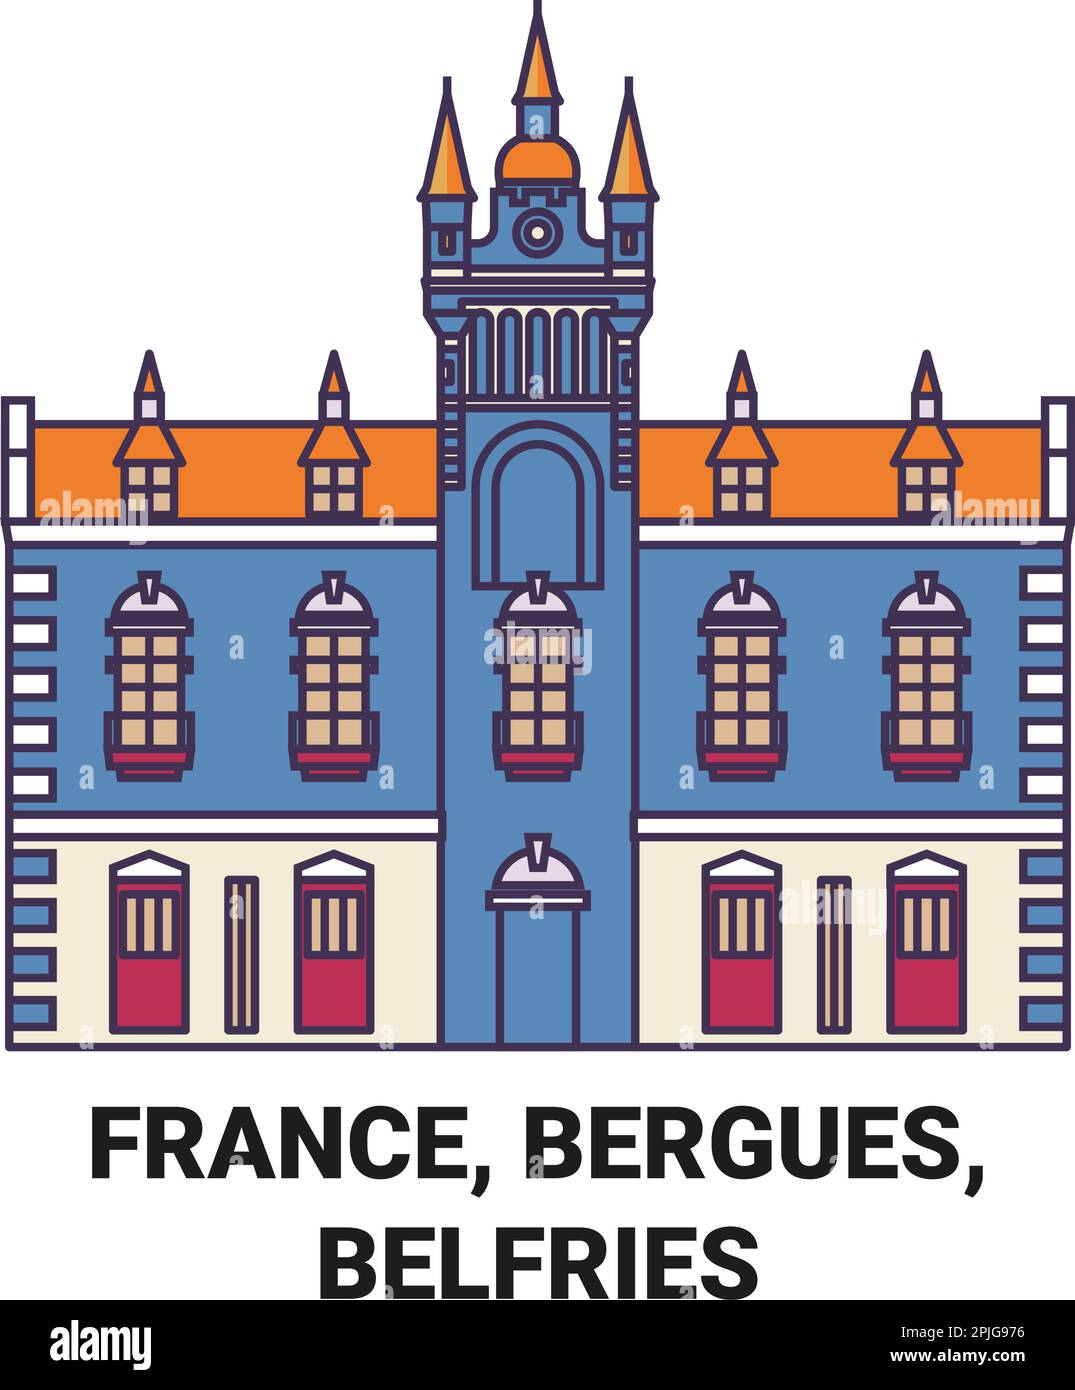 France, Bergues, Belfries, travel landmark vector illustration Stock Vector